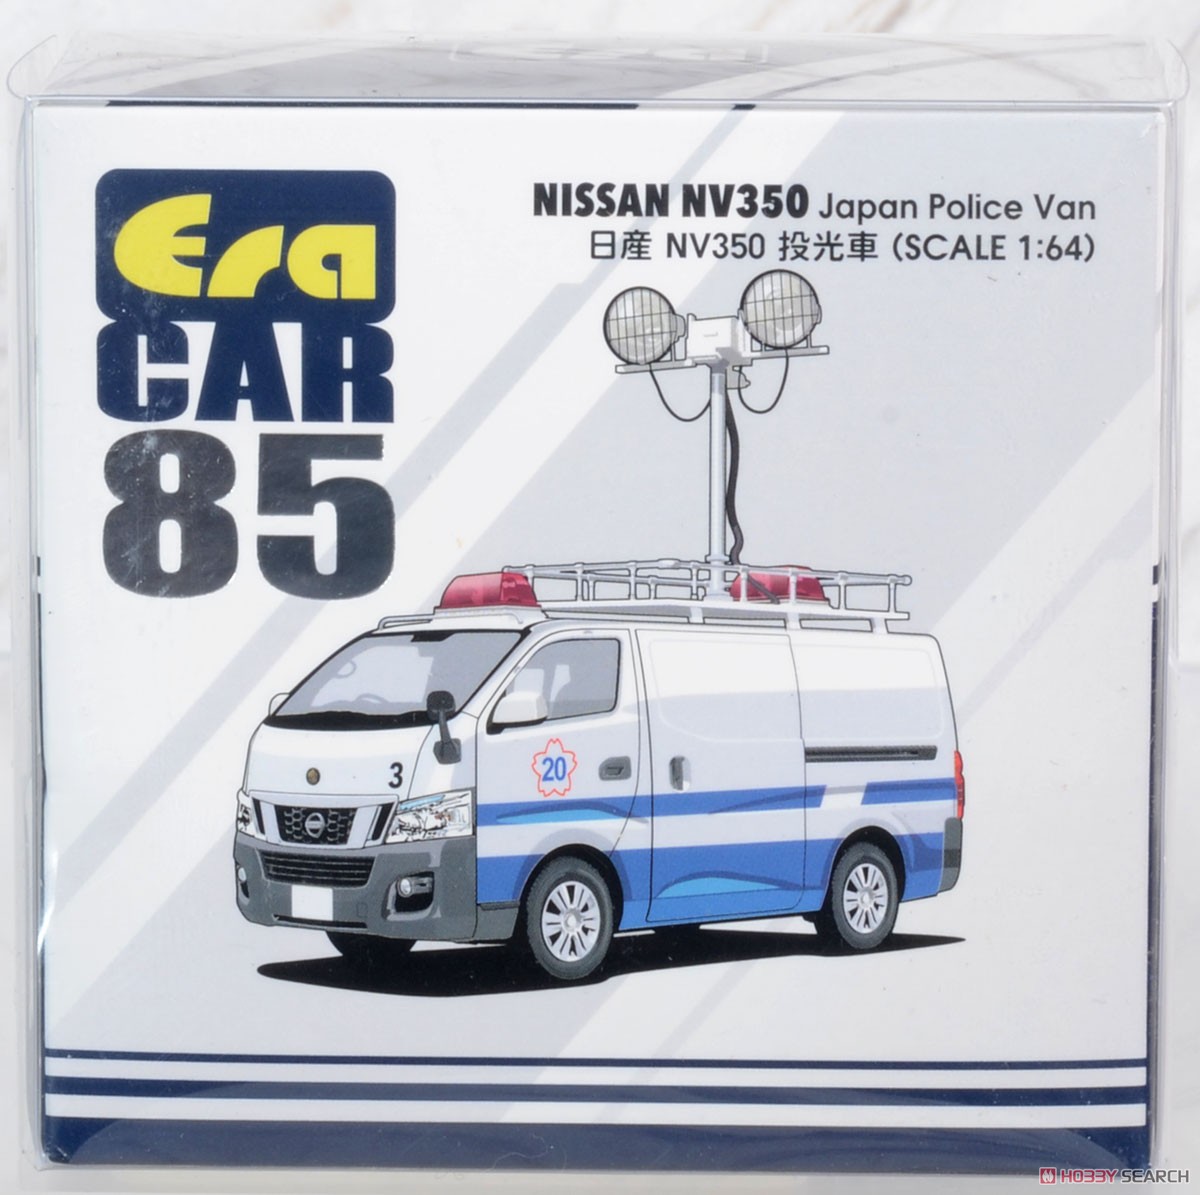 Nissan キャラバン NV 350 Japan Police Van 警察投光車 (ミニカー) パッケージ1